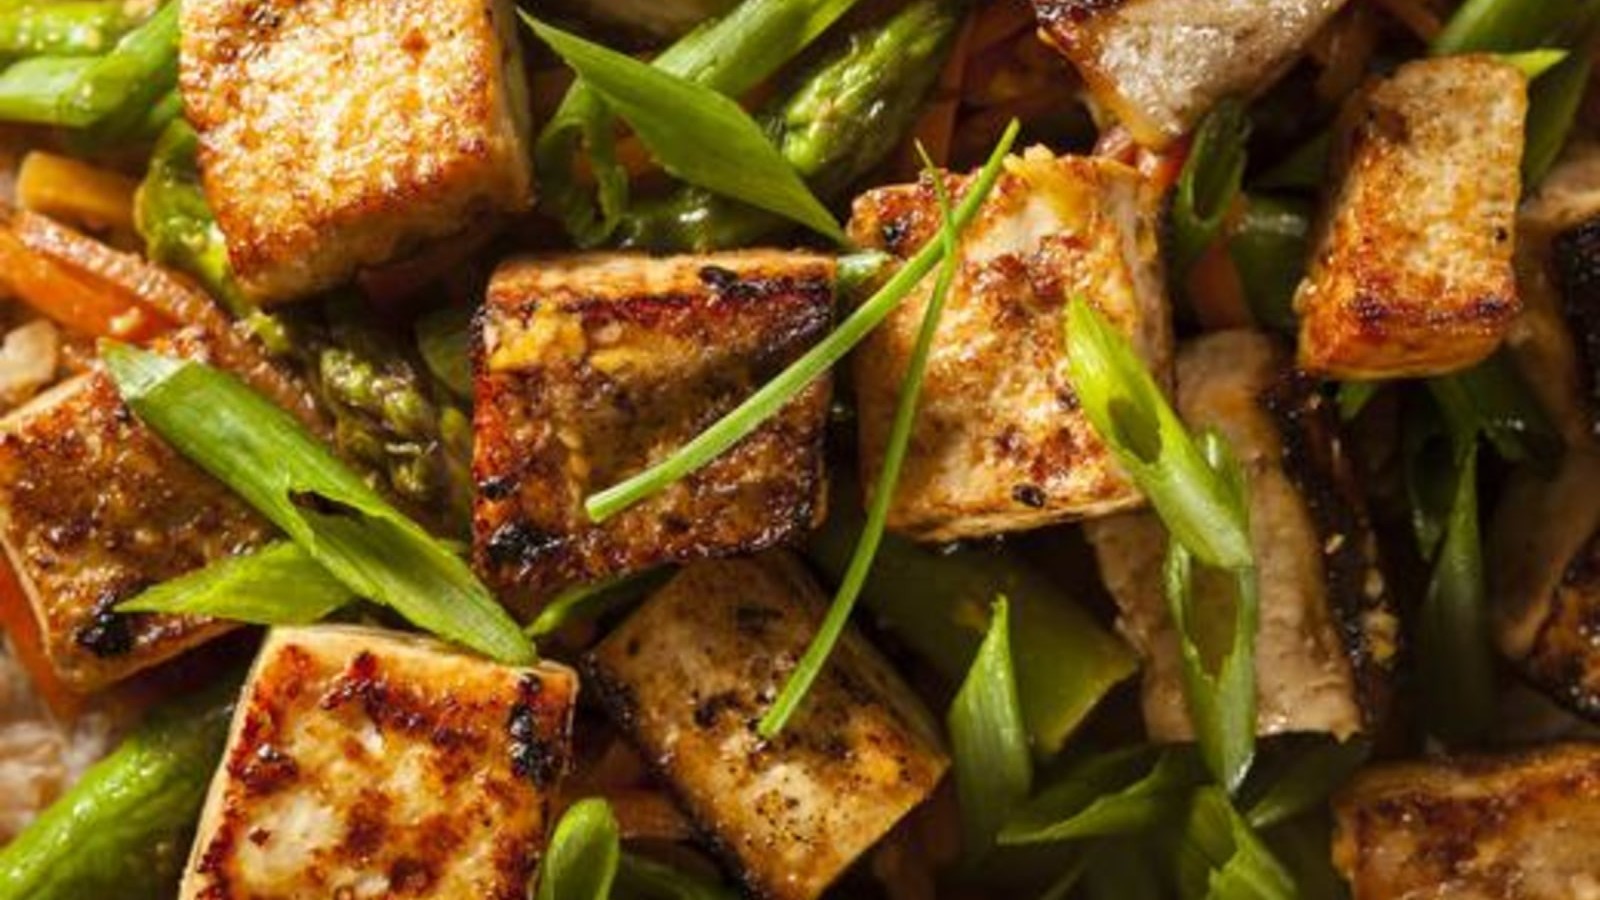 Image of Tofu Stir Fry Recipe: Highlighting A Vegan Option